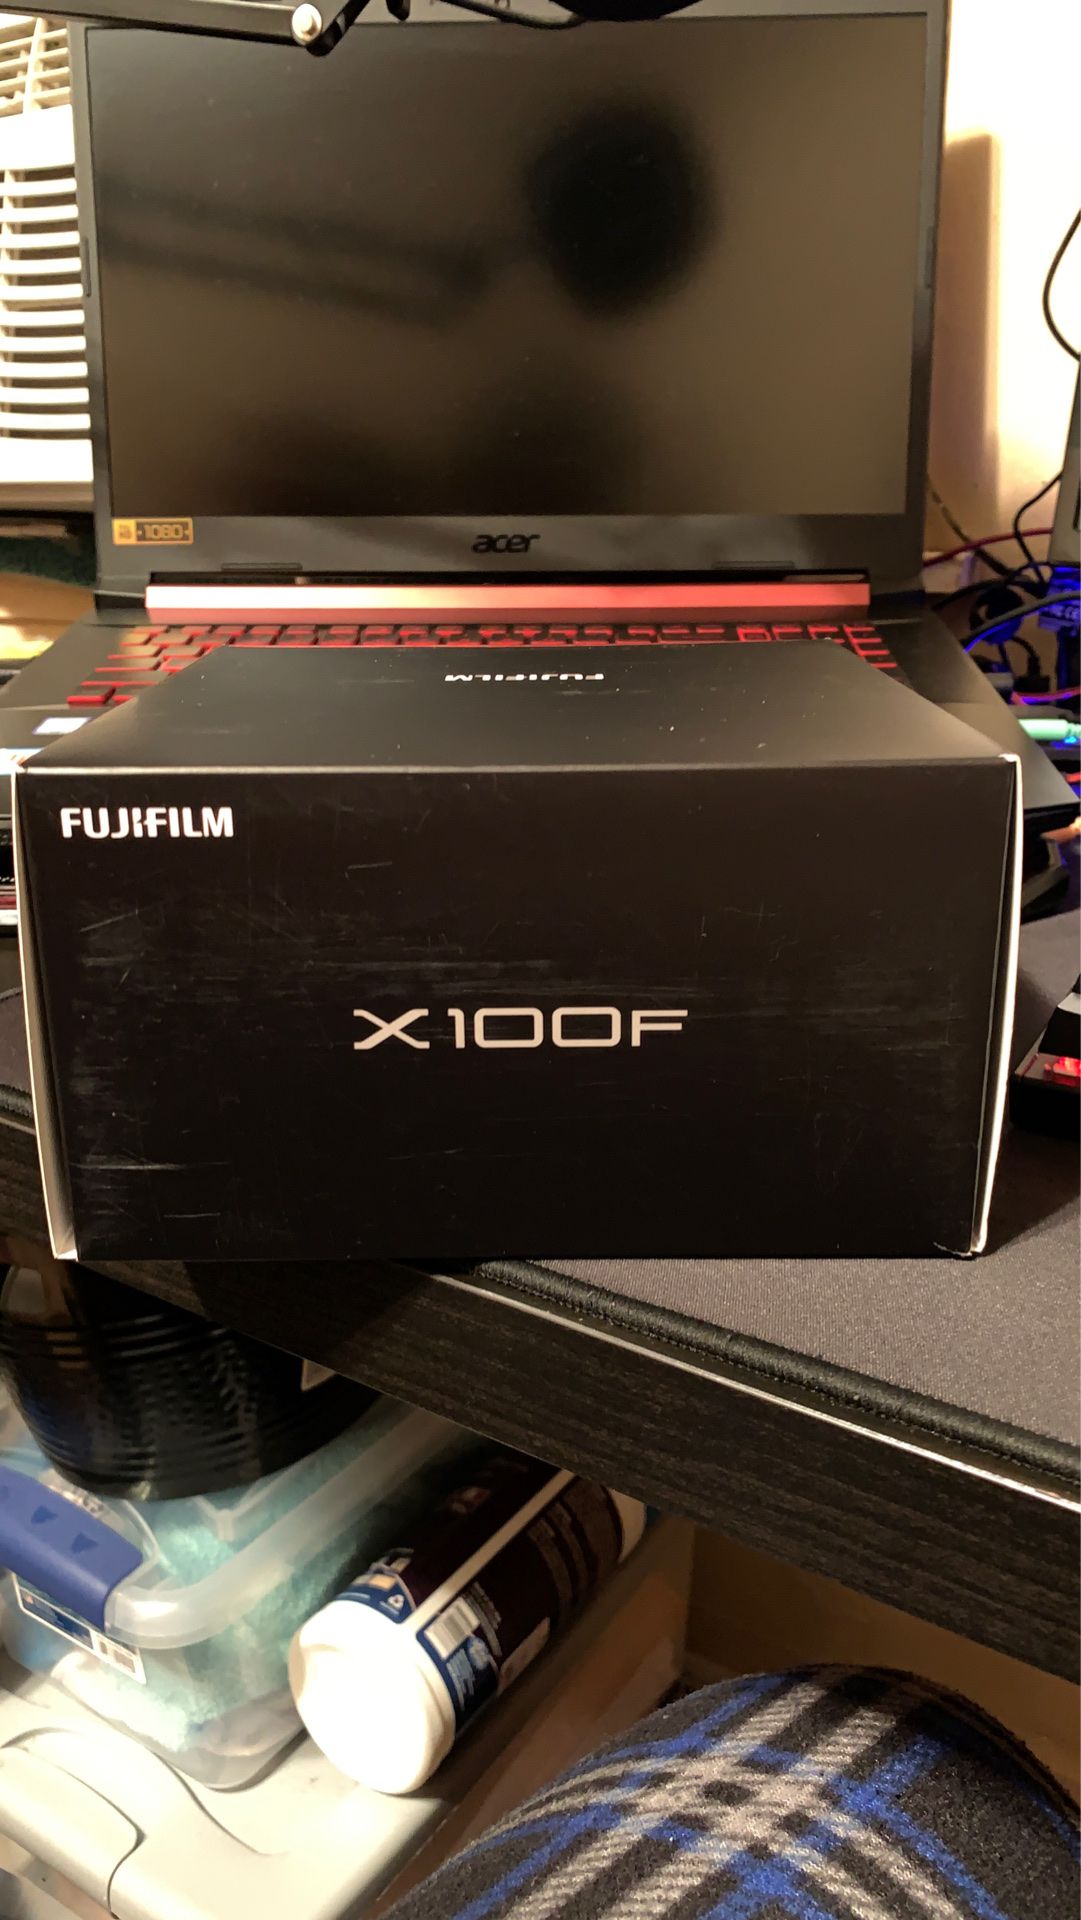 Fujifilm x-100f TRADE FOR FUJIFILM XT2 X-T2 X-Pro2 W/ 23mm F2 OR FUJIFILM LENS + CASH